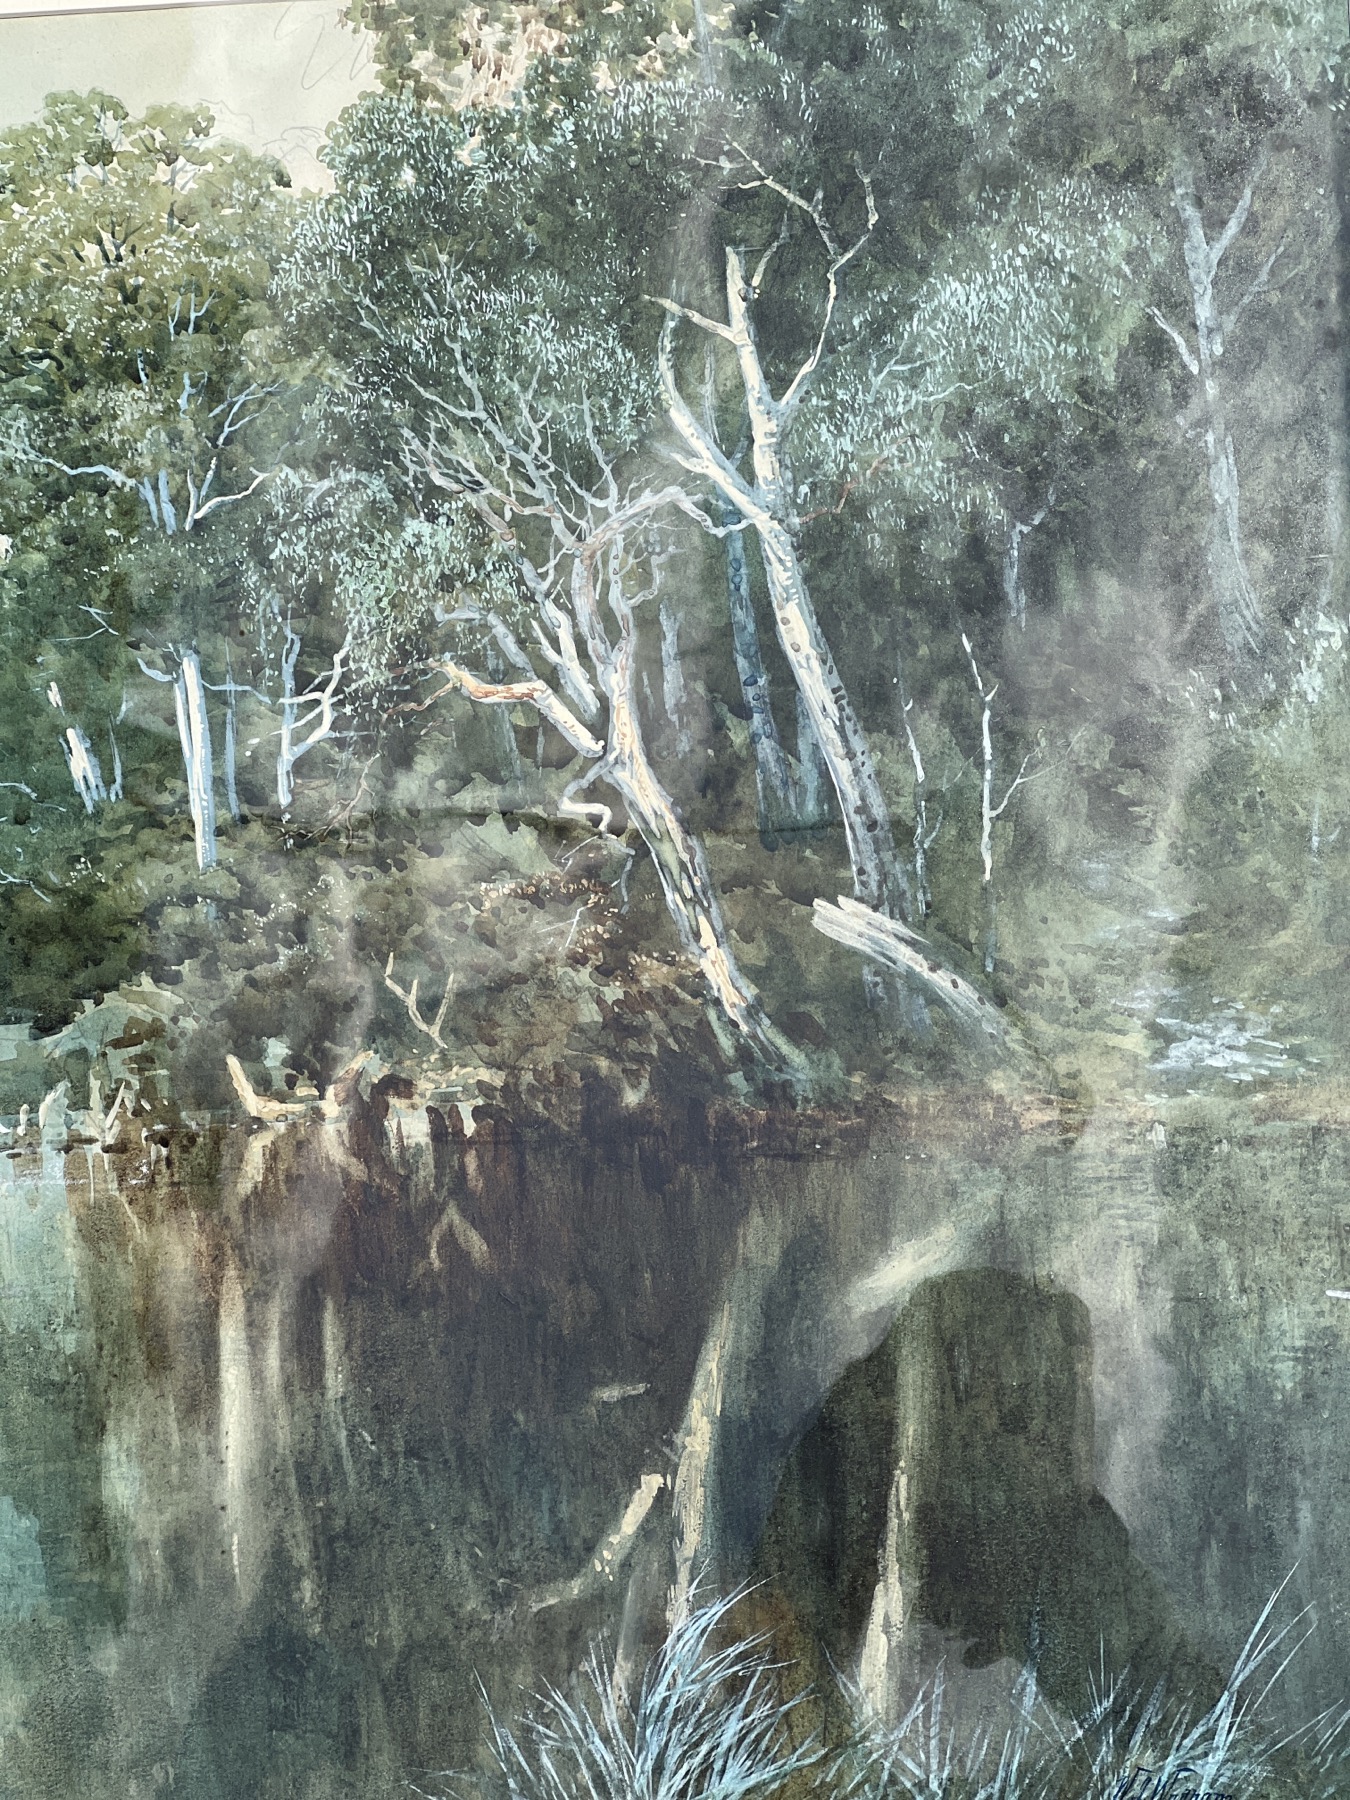 WJ Wadham, Australian River Landscape watercolour, 1880's